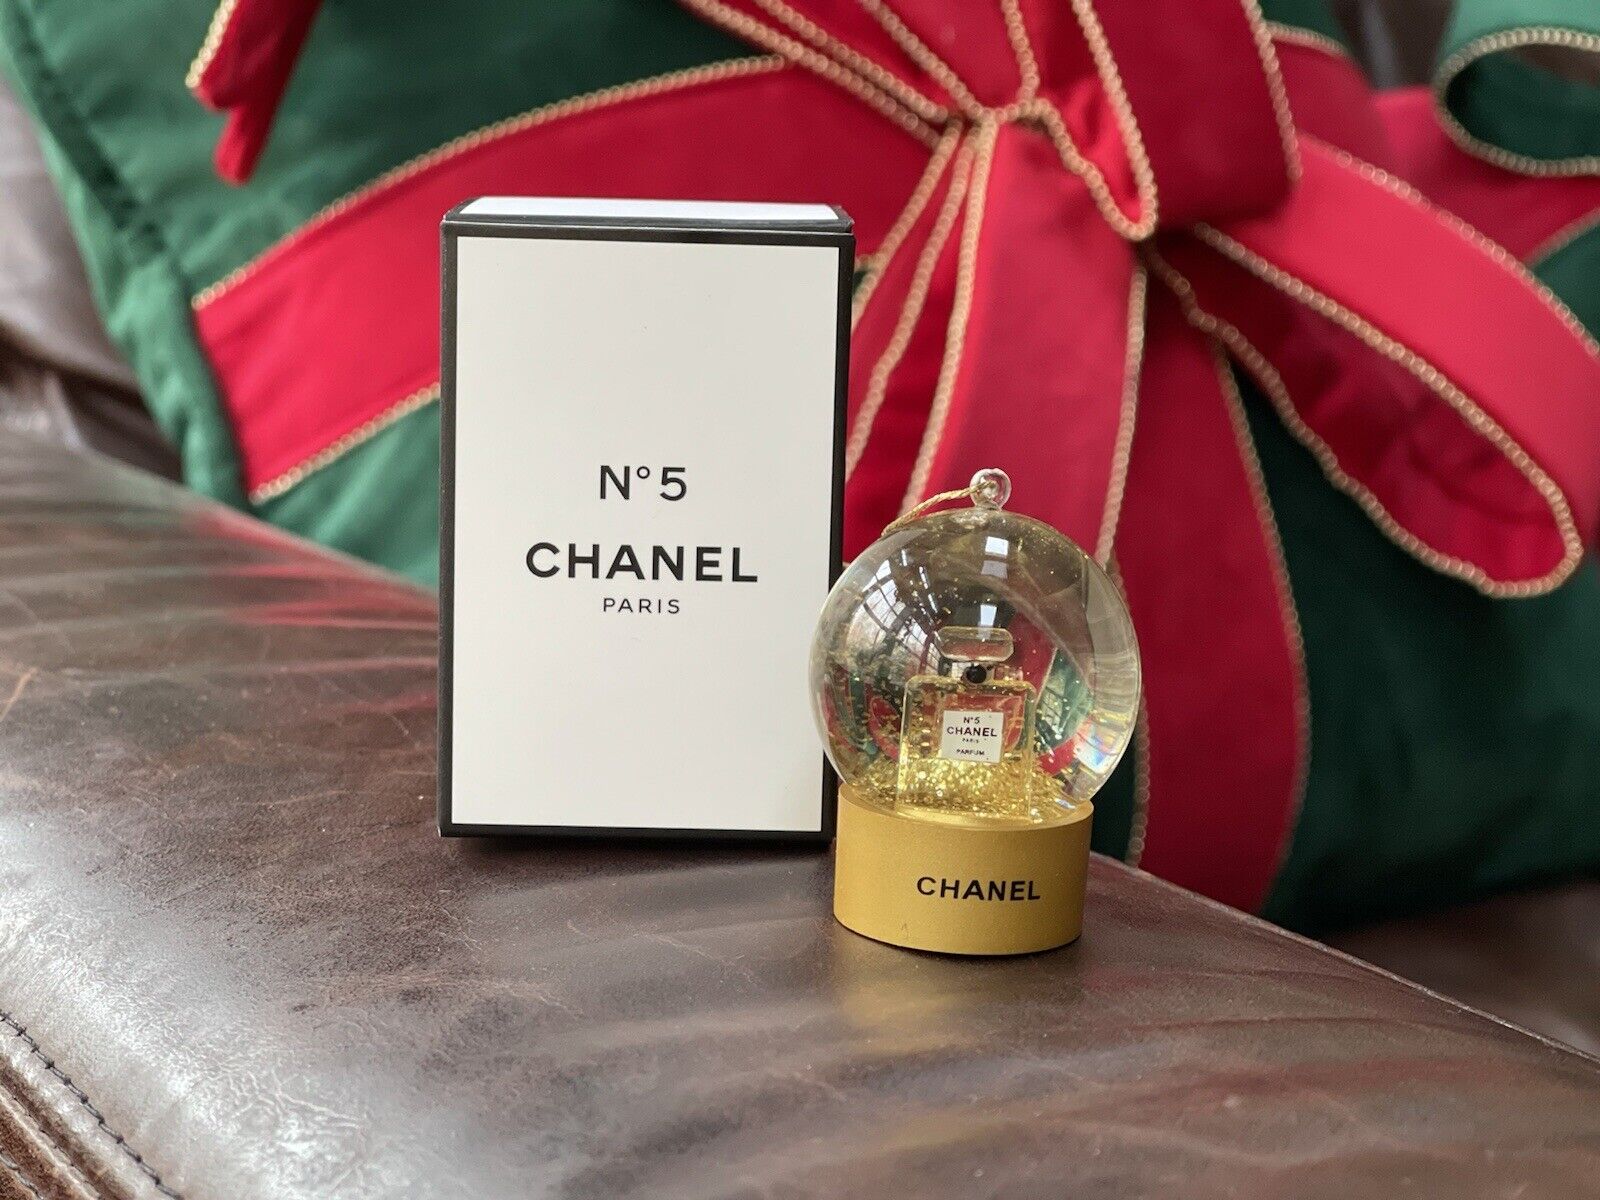 CHANEL Holiday Christmas Tree Snow Globe Ornament +Box ~FAST SHIPPING USA Seller